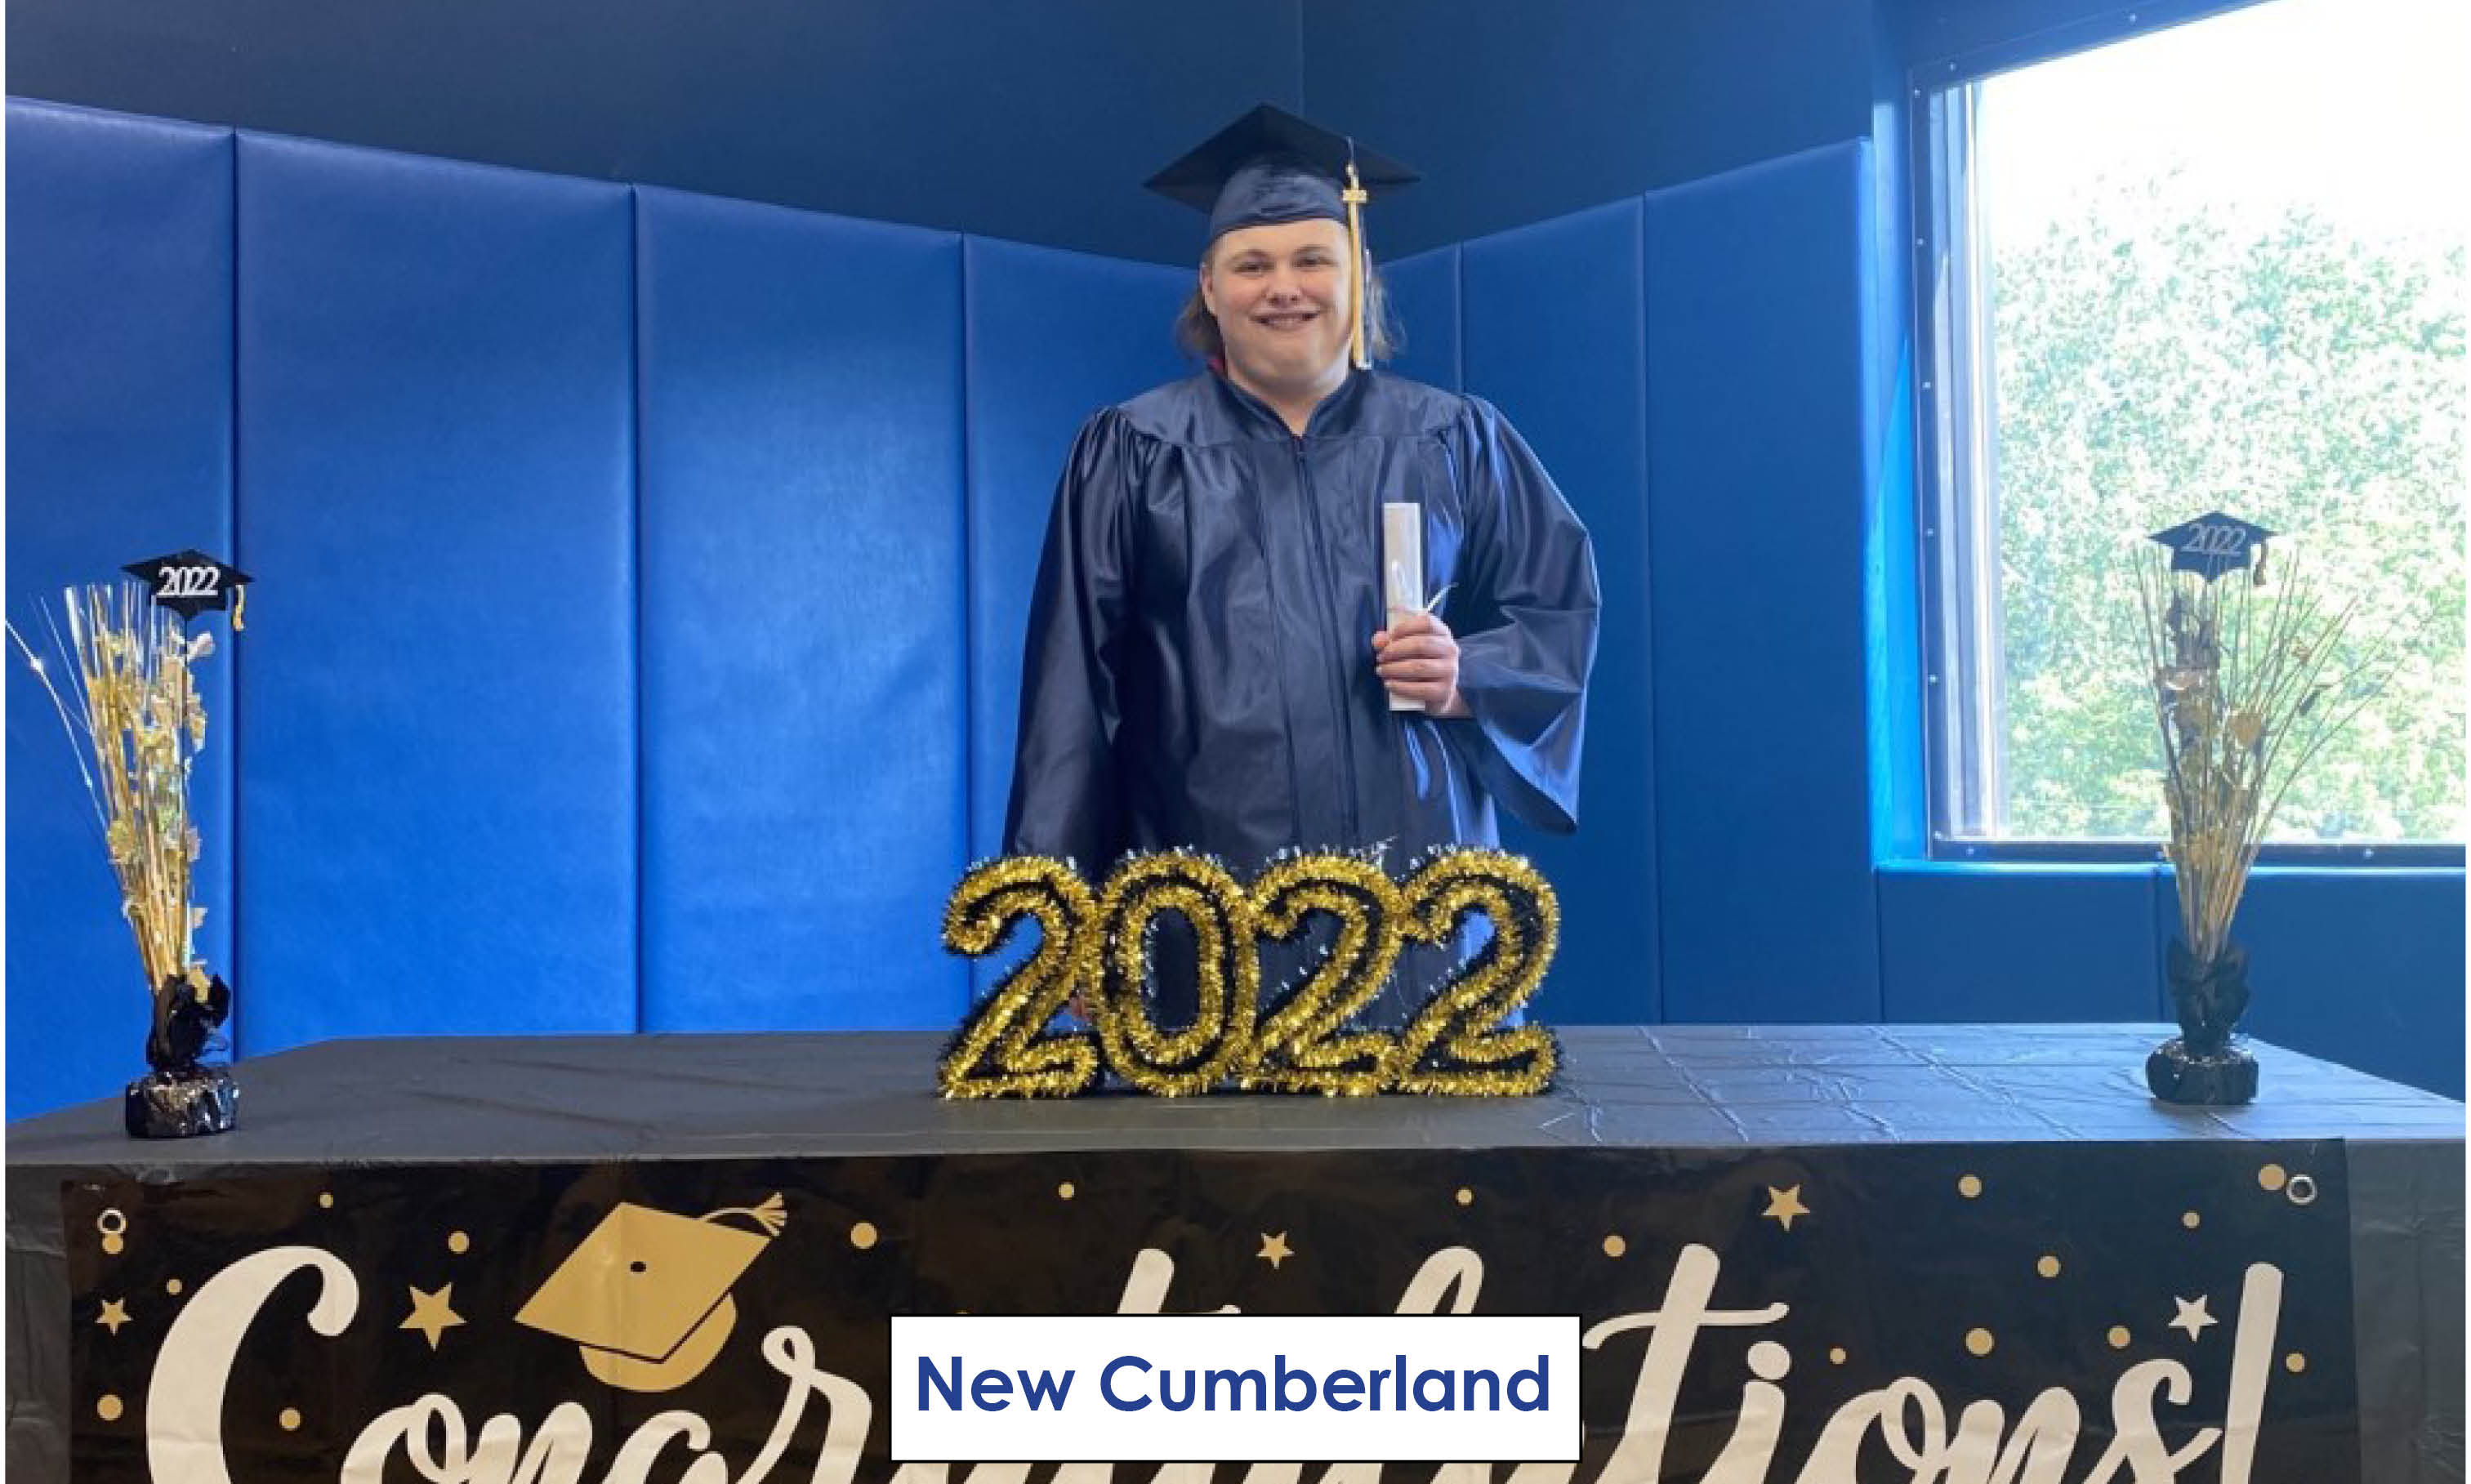 New Cumberland graduation - June 1, 2022